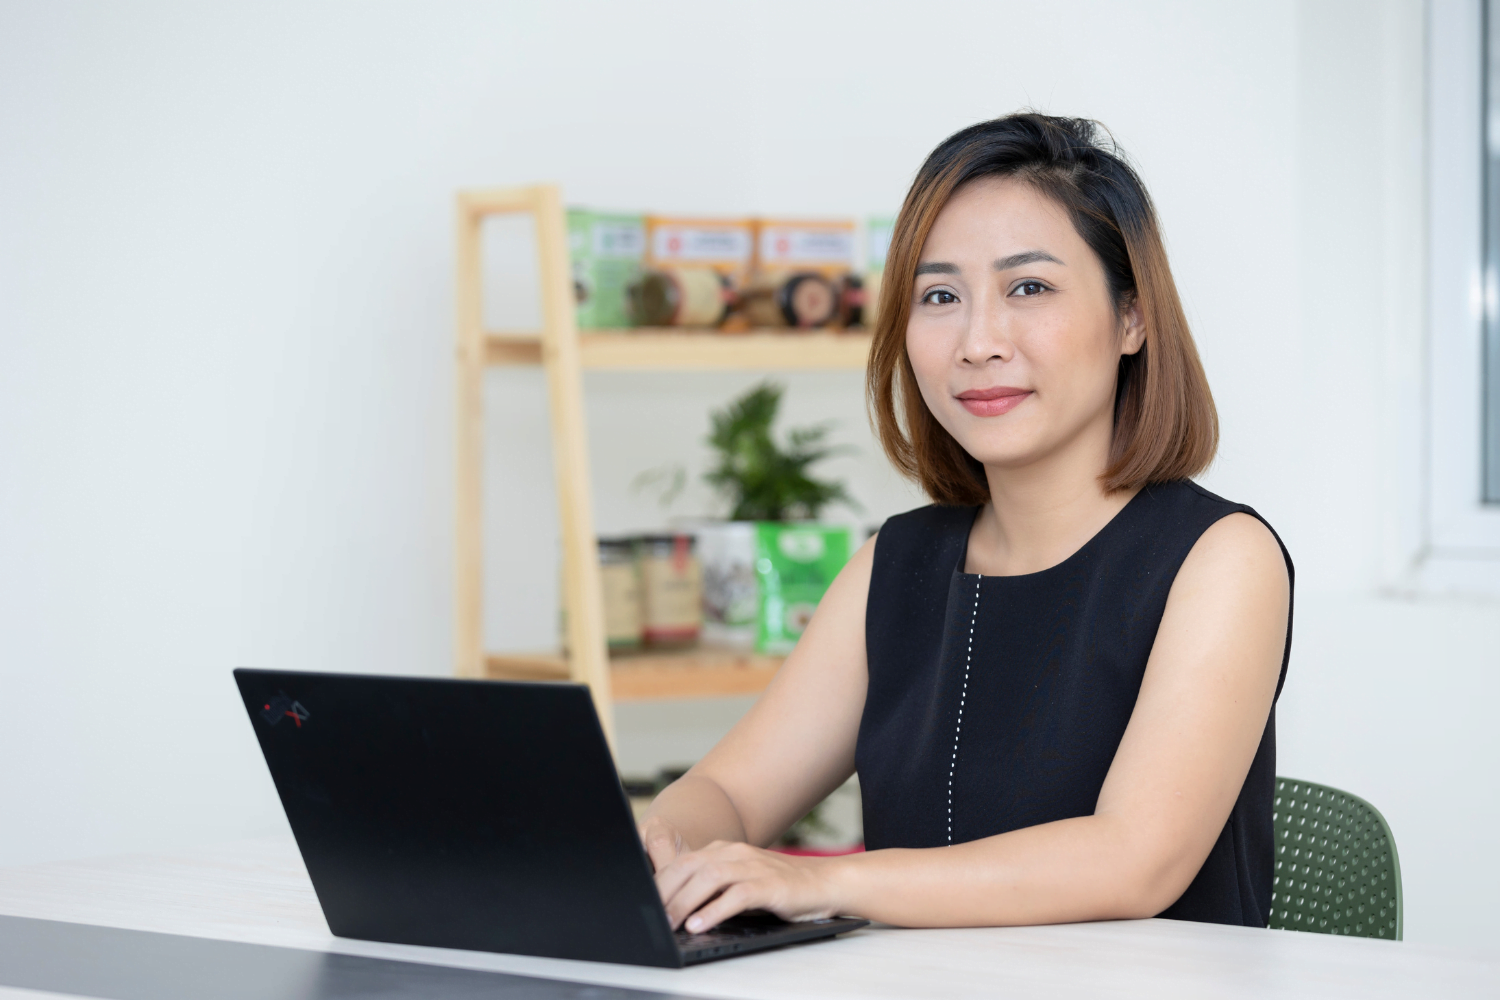 Van Pham does computer work at her business in Vietnam